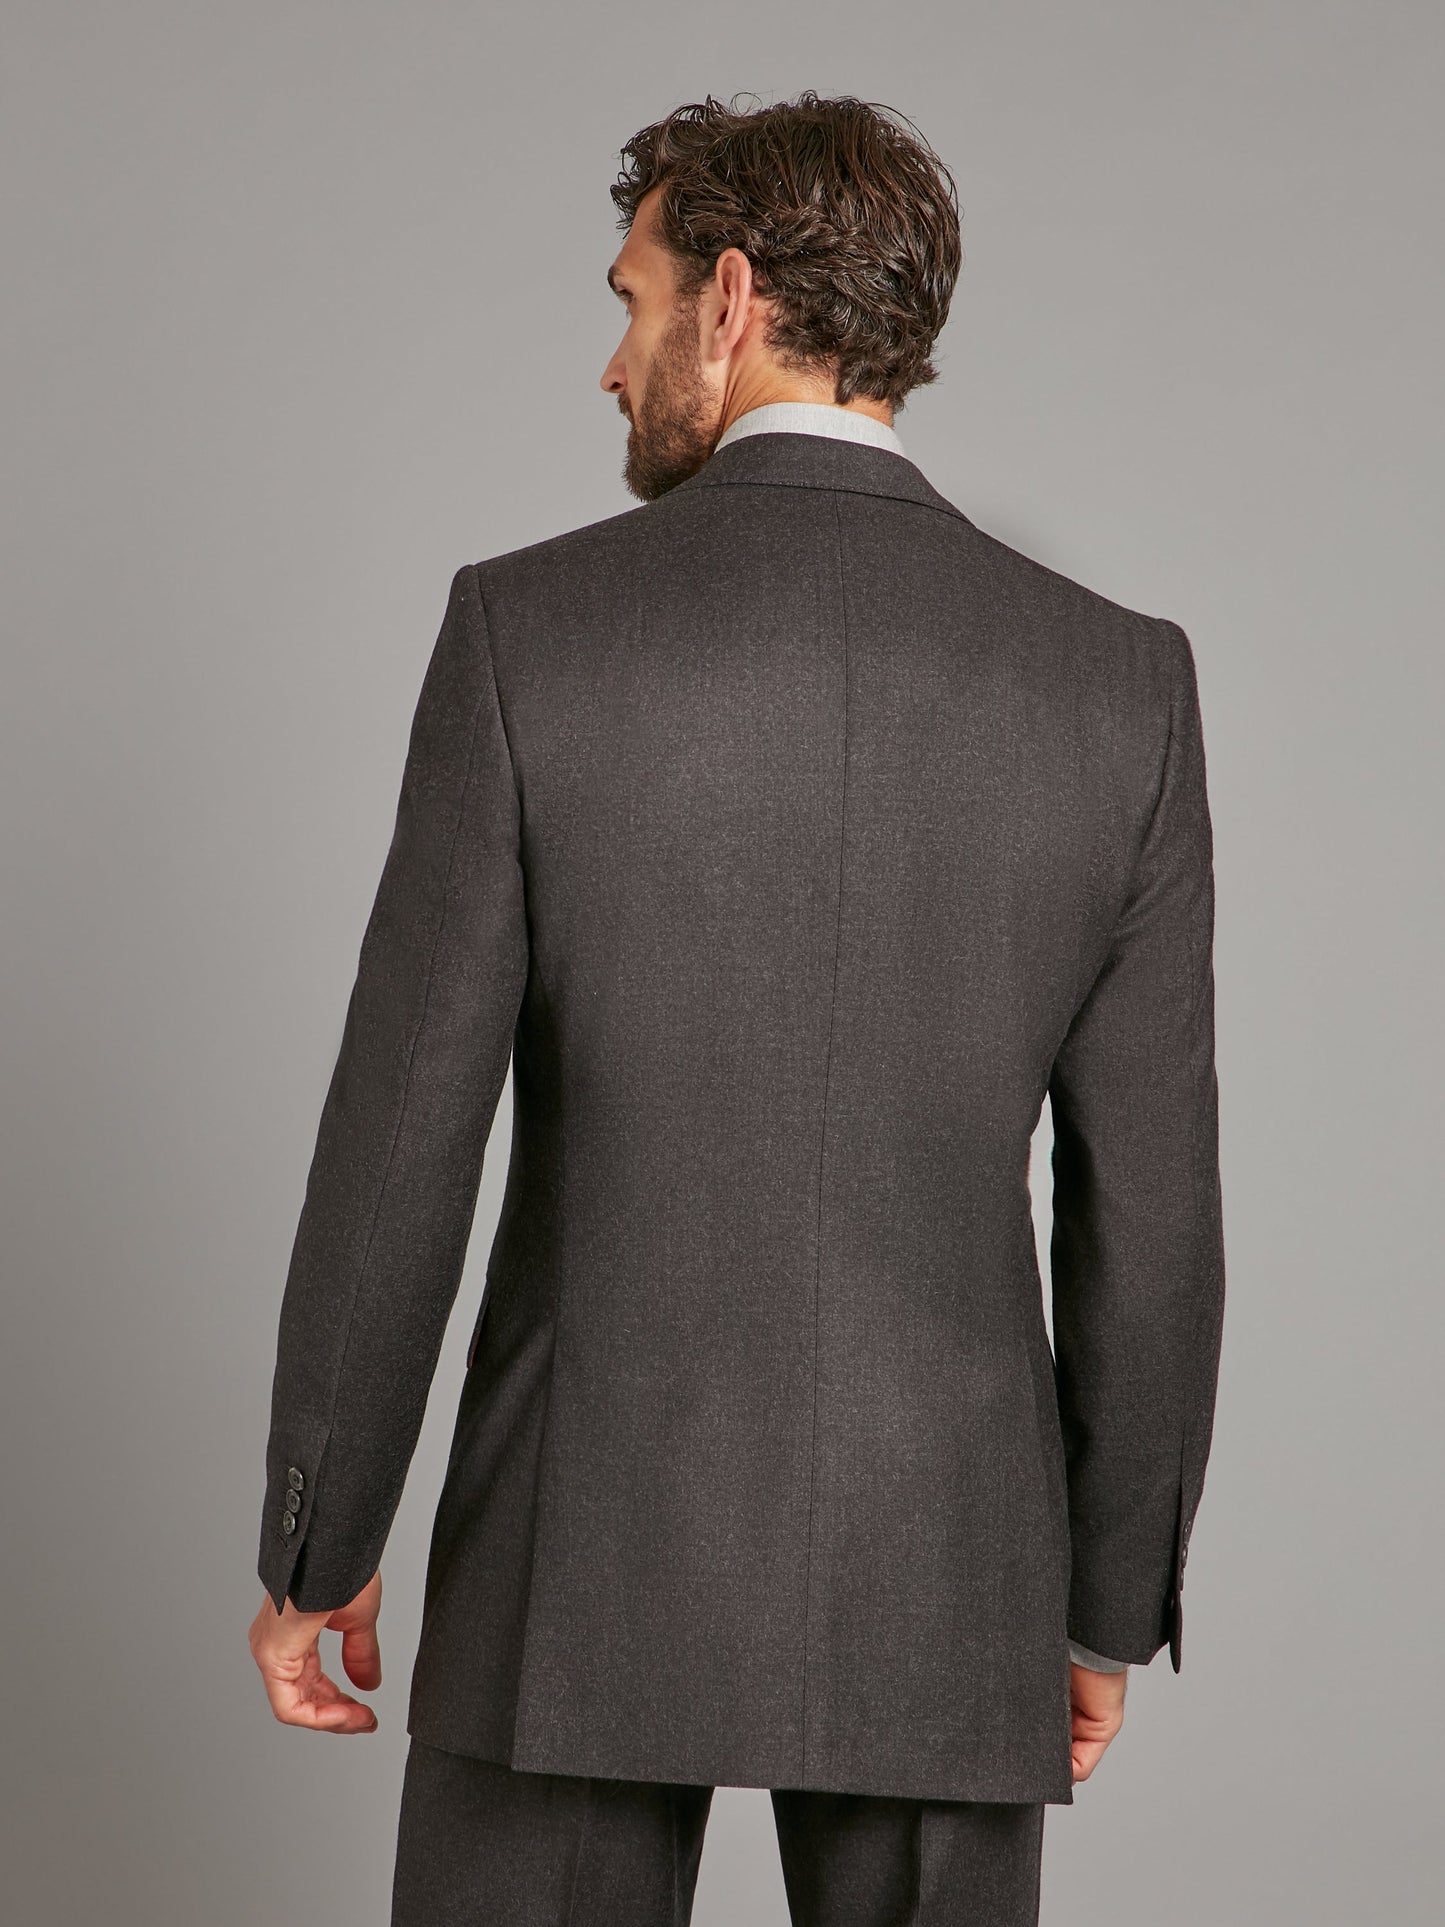 Eaton Suit - Grey Flannel